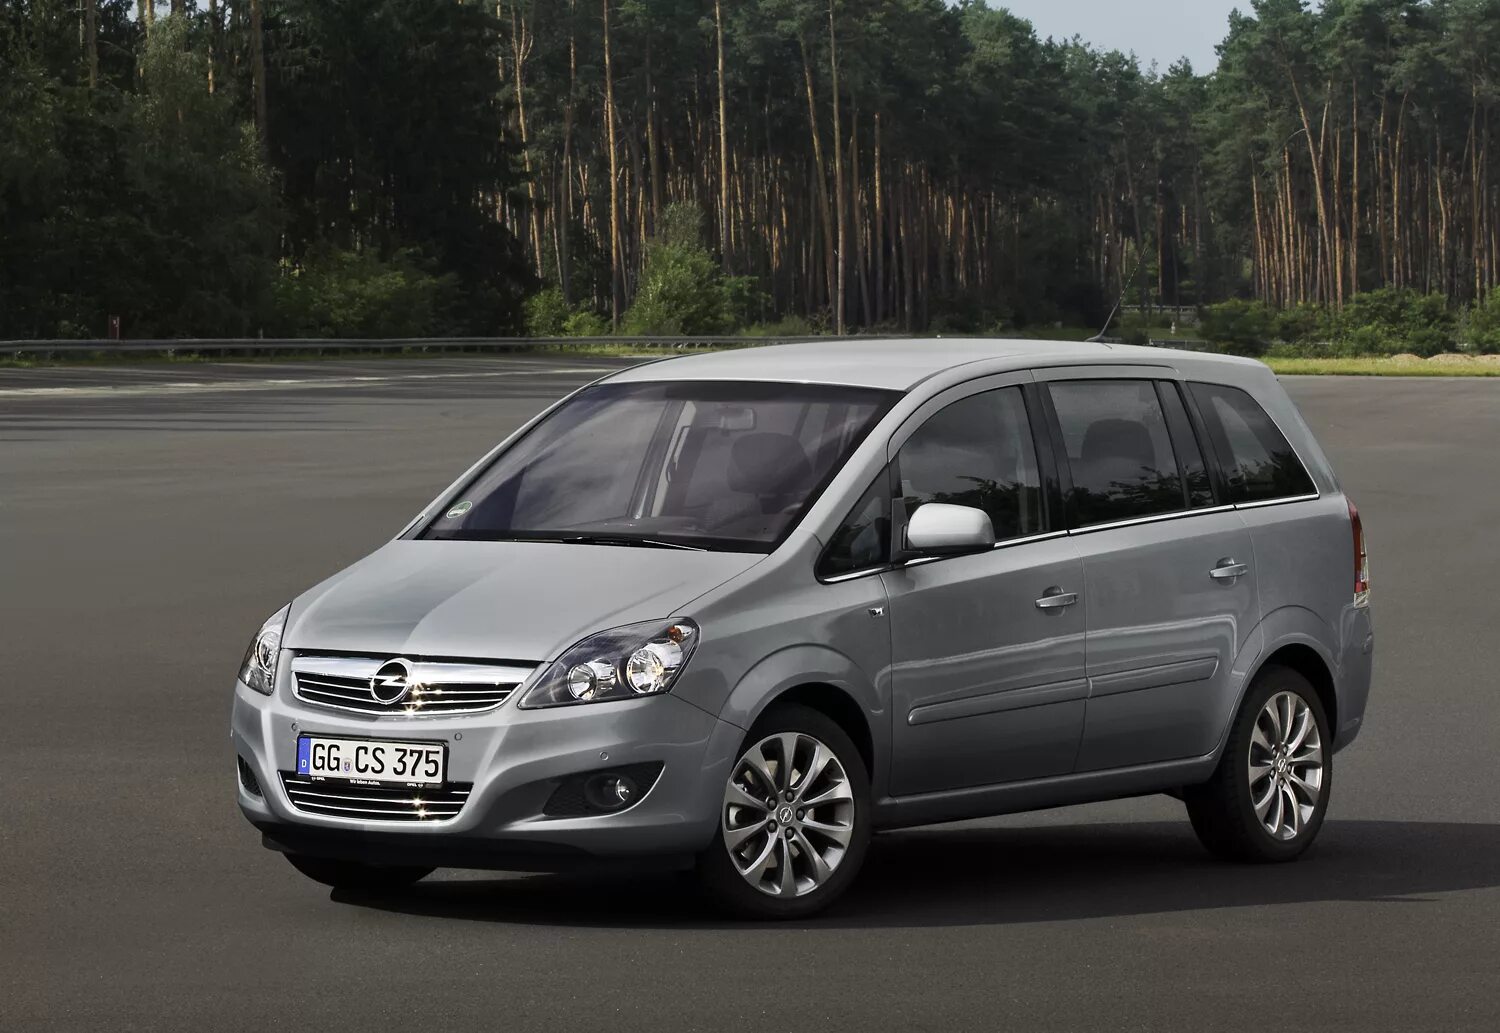 Opel Zafira b 2014. Opel Zafira b 2011. Опель Зафира б 2011. Зафира 2. Опель зафира 2 купить